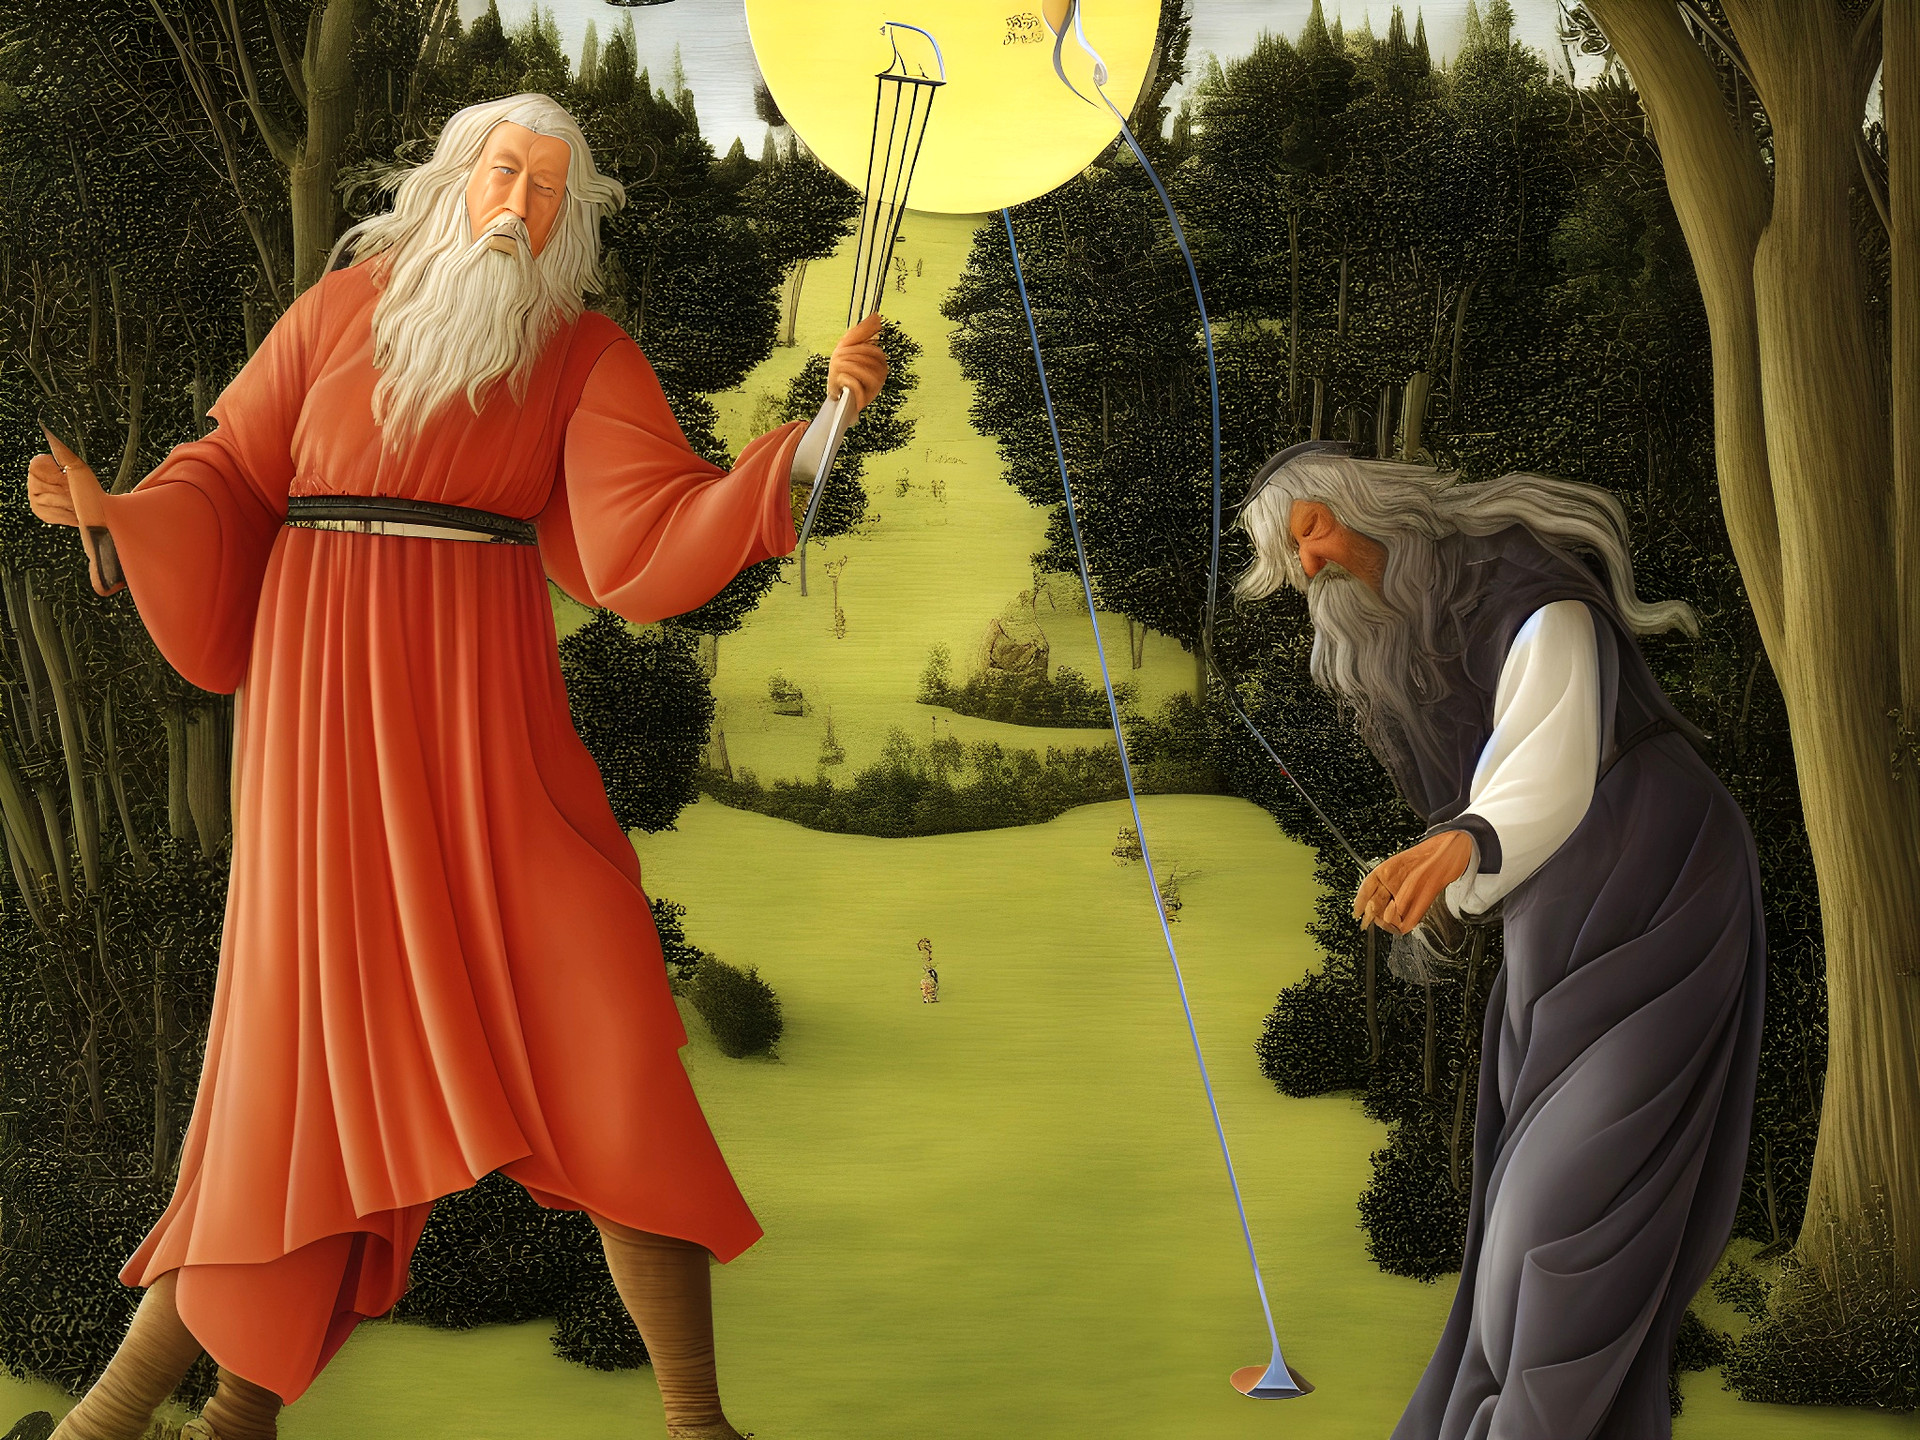 Gandalf Plays Disc Golf with da Vinci